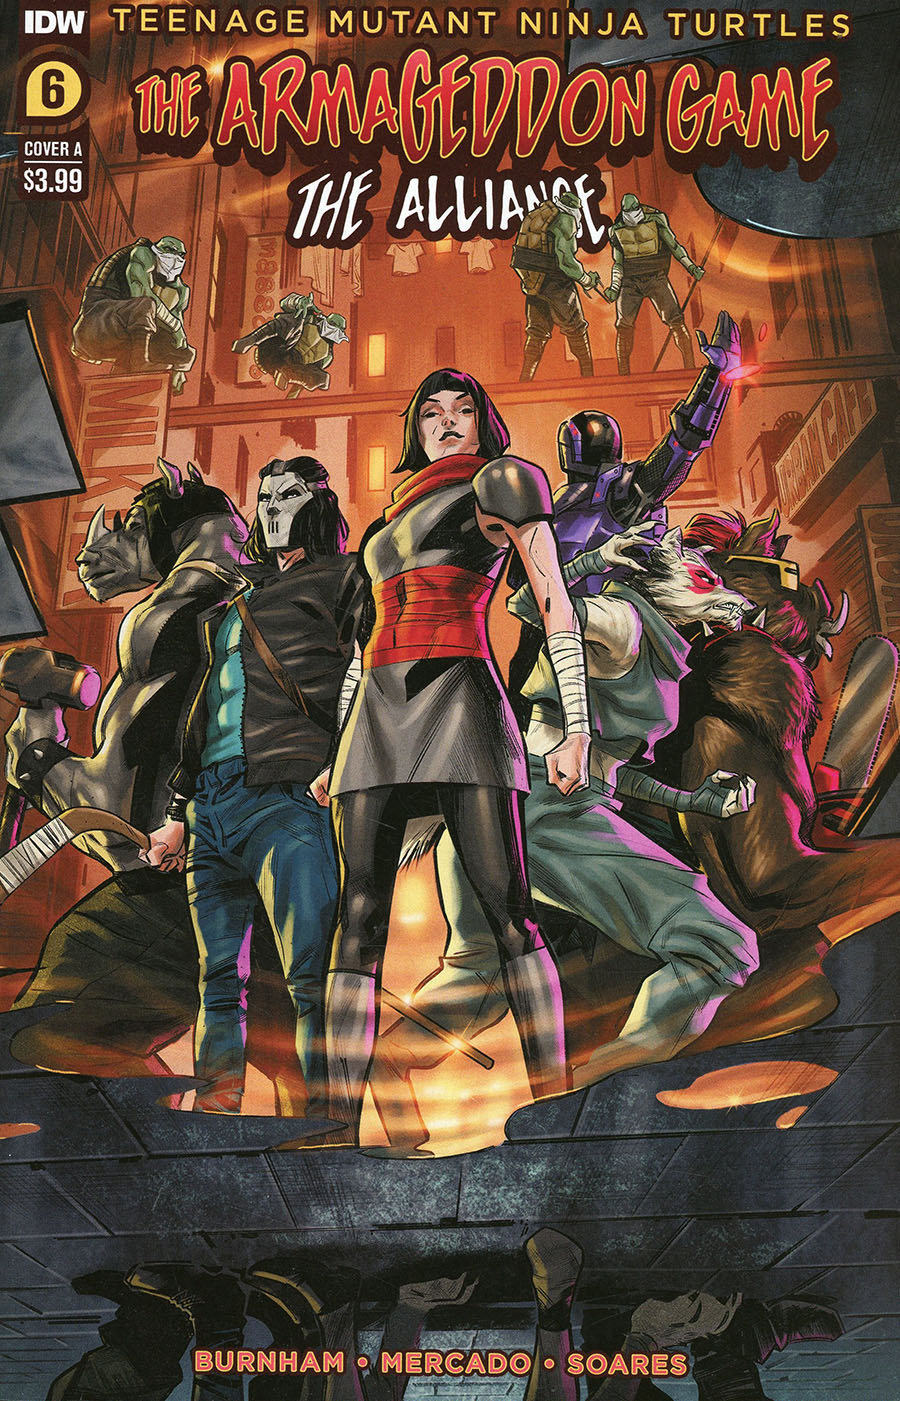 Teenage Mutant Ninja Turtles Armageddon Game The Alliance #6 Cover A Regular Roi Mercado Cover